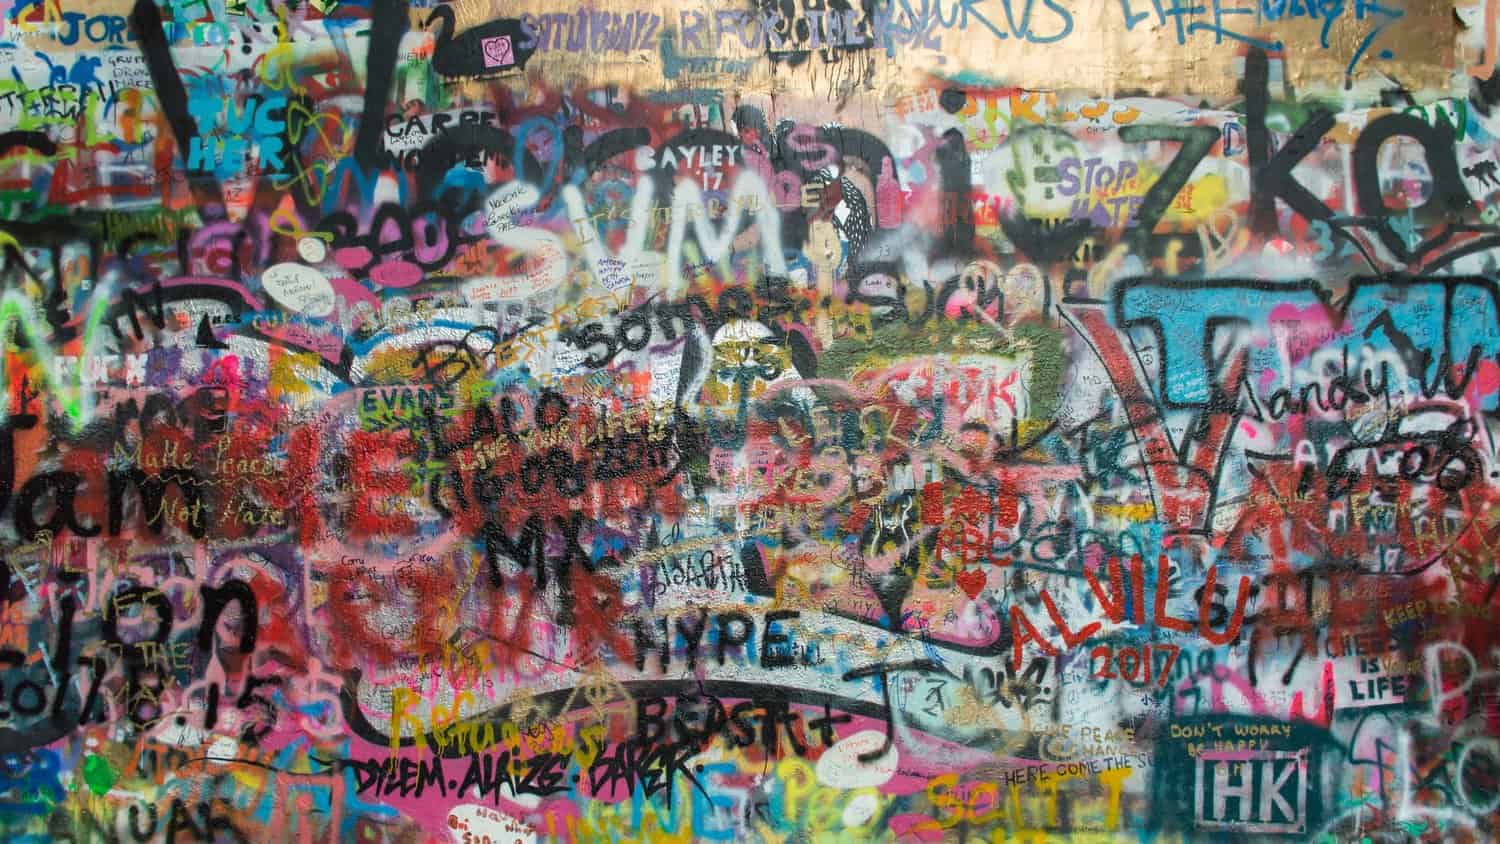 Iconic John Lennon Wall with Graffiti in Prague